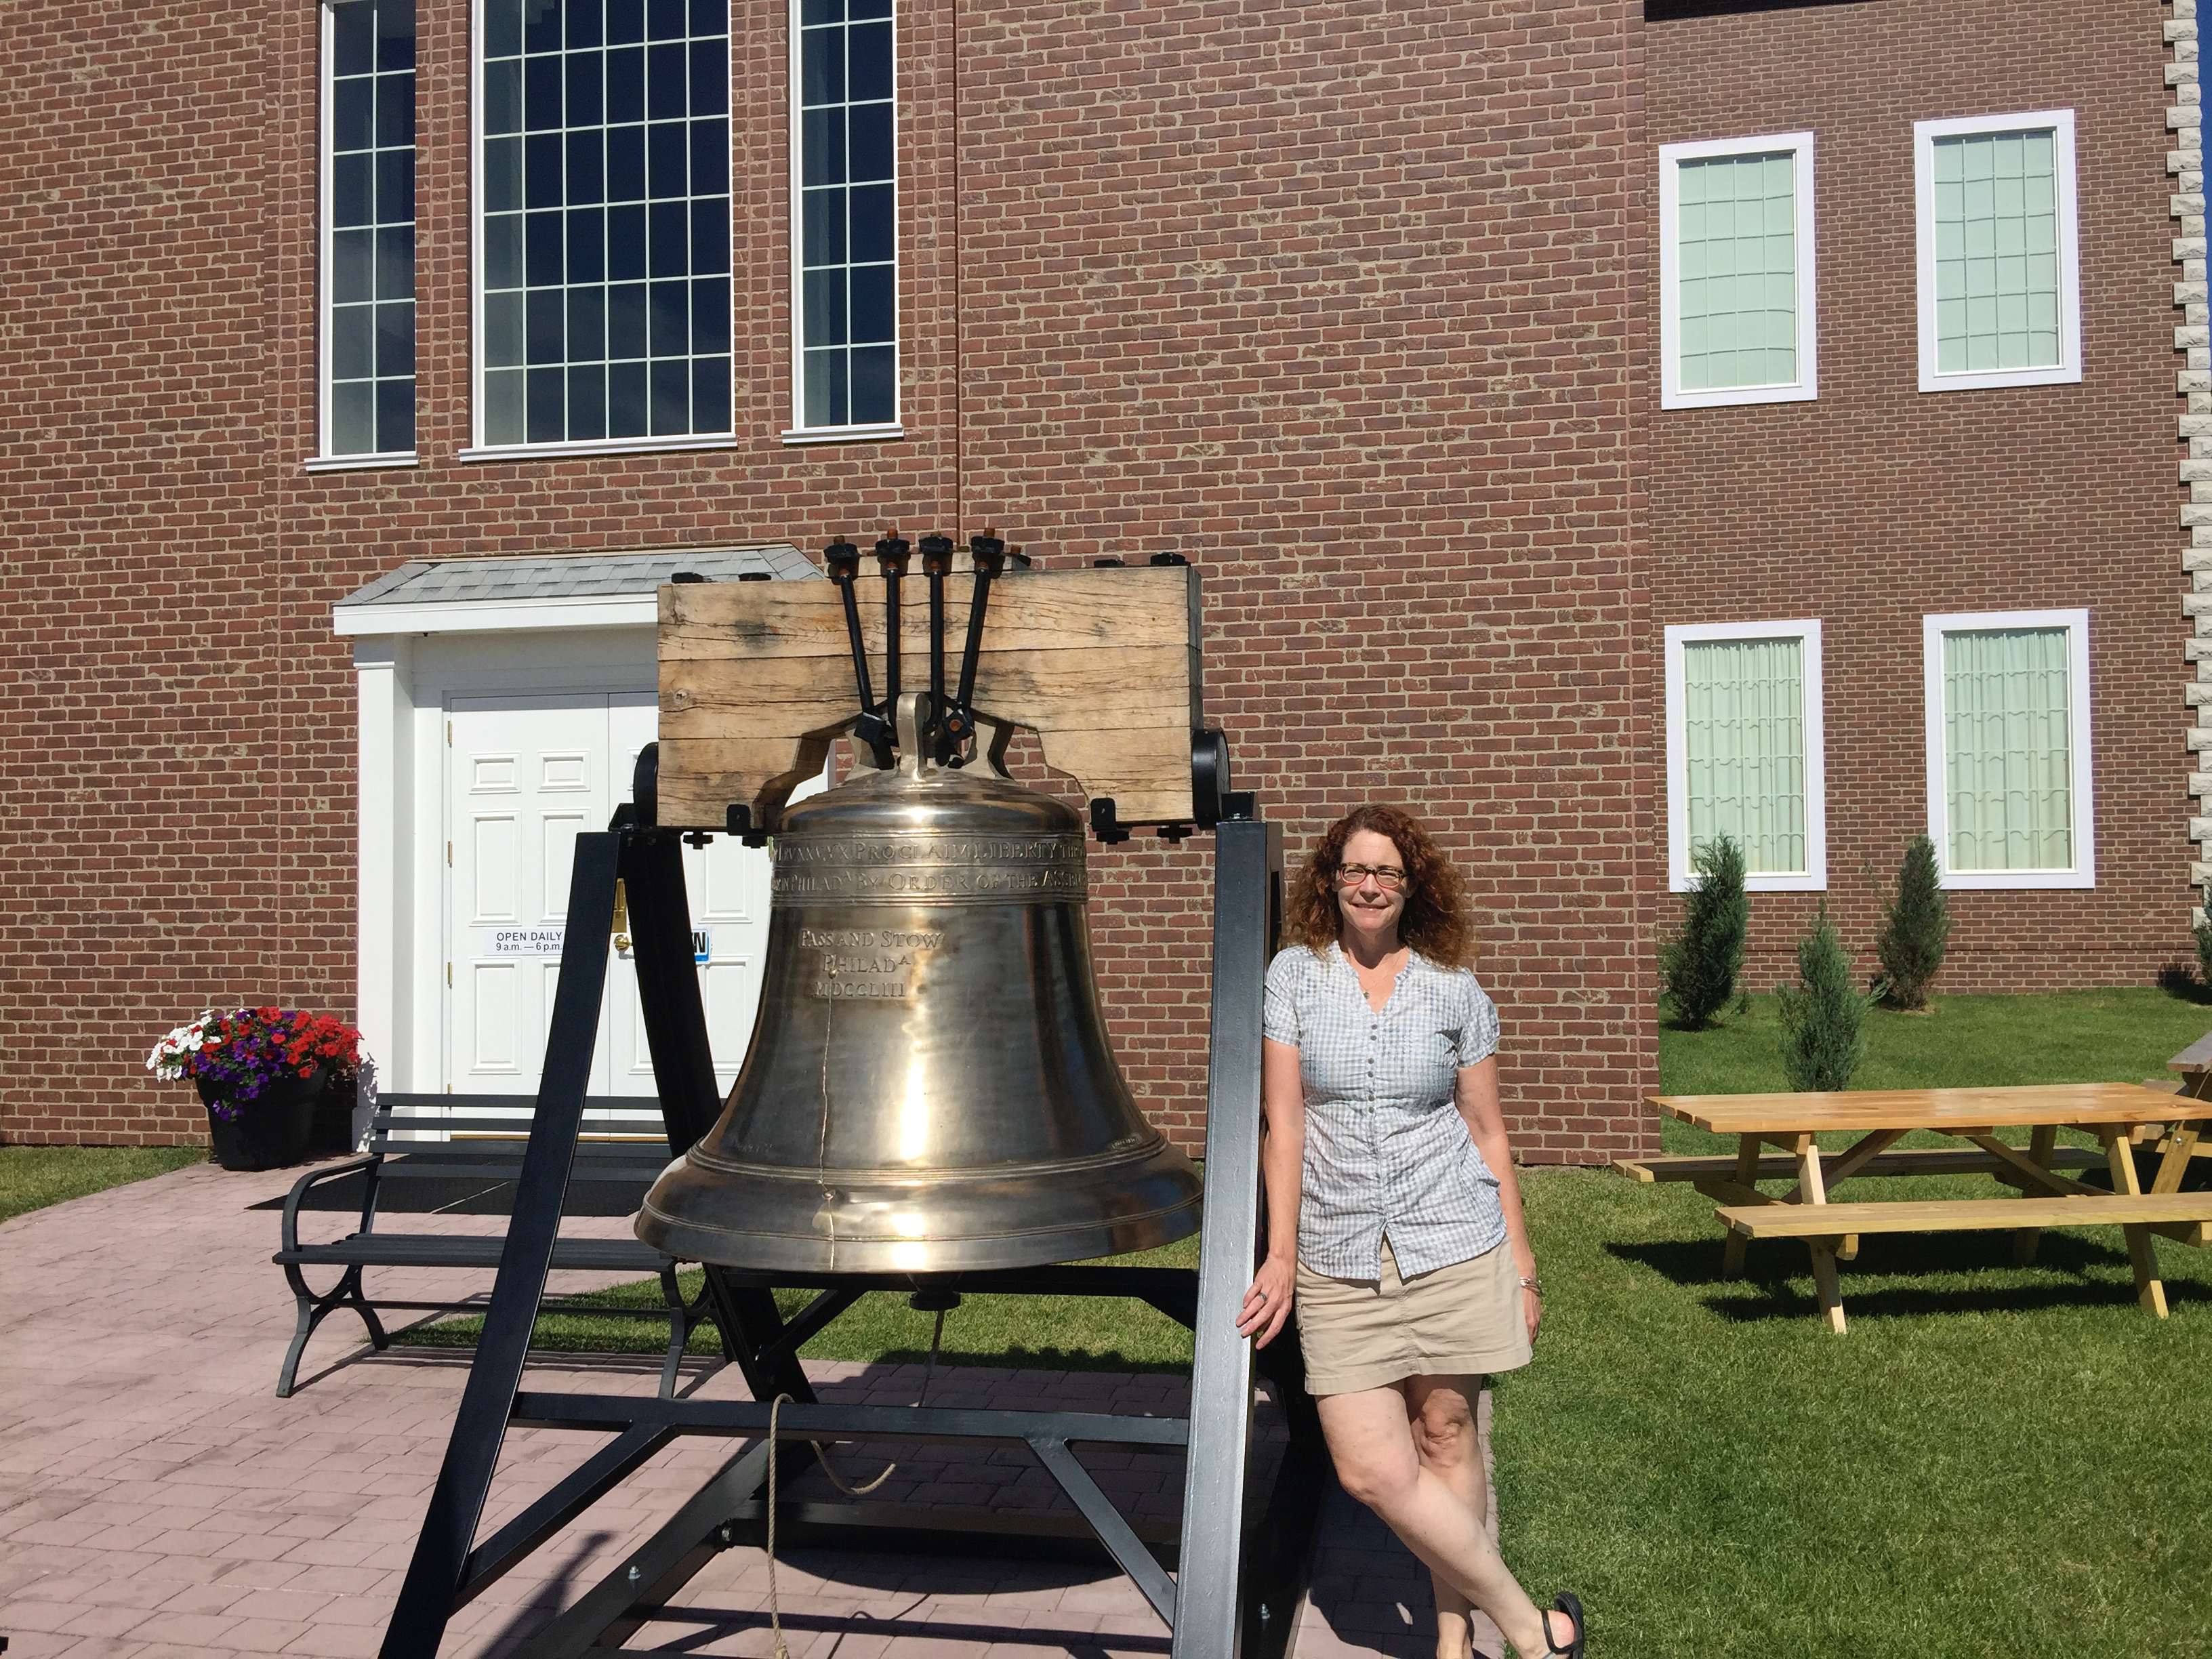 Other Liberty Bells, Rapid City South Dakota